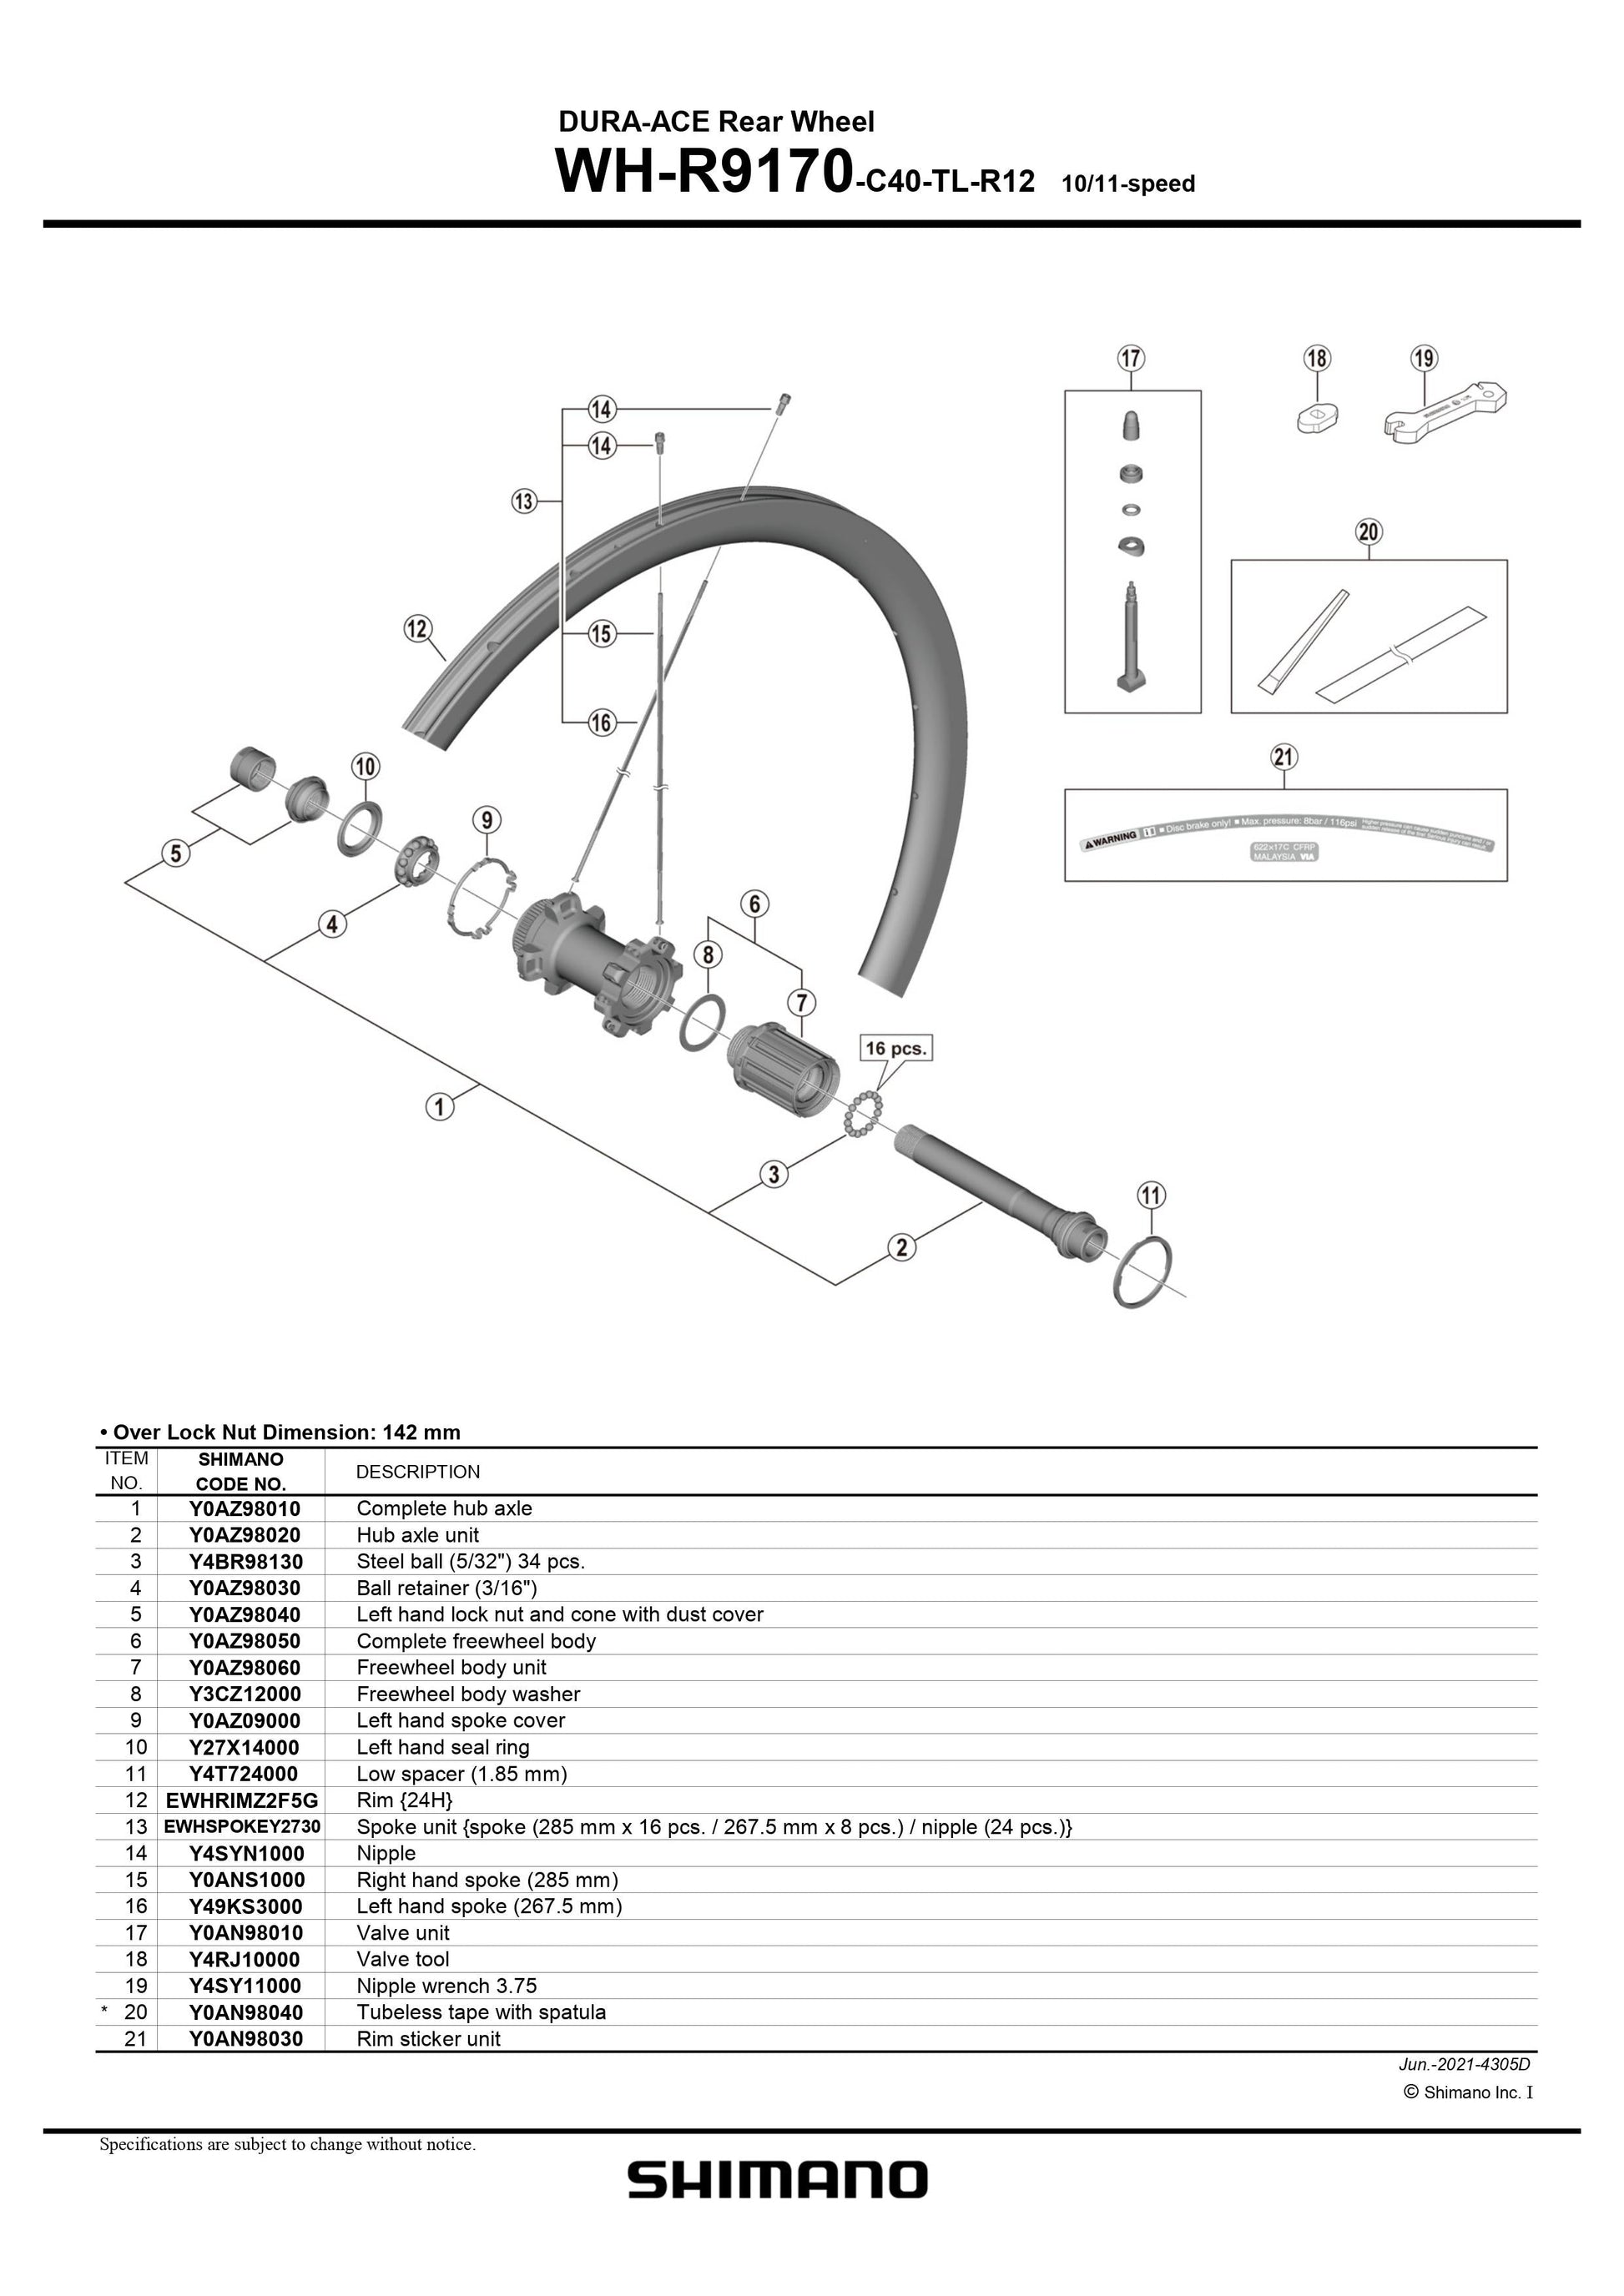 SHIMANO DURA-ACE WH-R9170-C40-TL-R12 Rear Wheel Spoke Kit 285mm x 16 pcs. 267.5mm x 8 pcs. Nipple 24 pcs. - 10/11-speed - EWHSPOKEY2730-Pit Crew Cycles